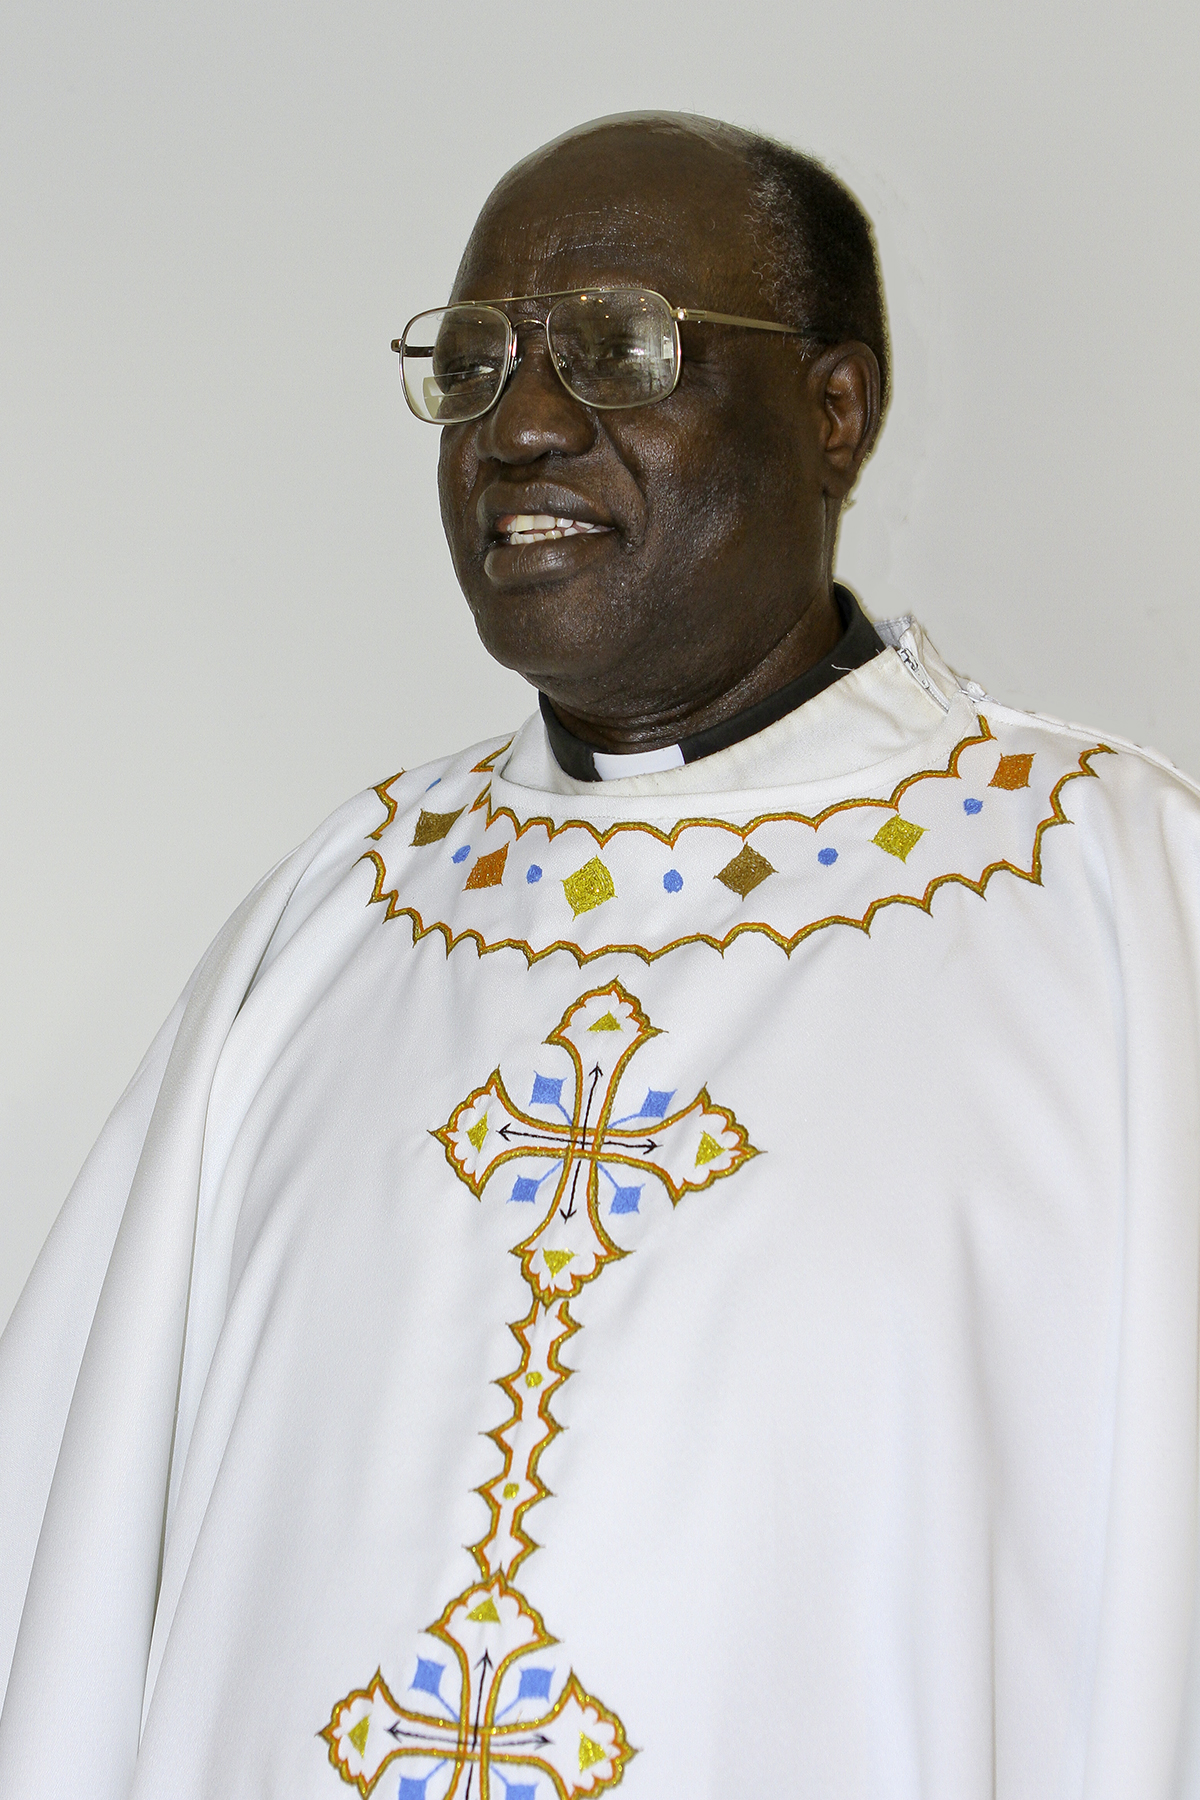 Father Modi Abel Nyorko